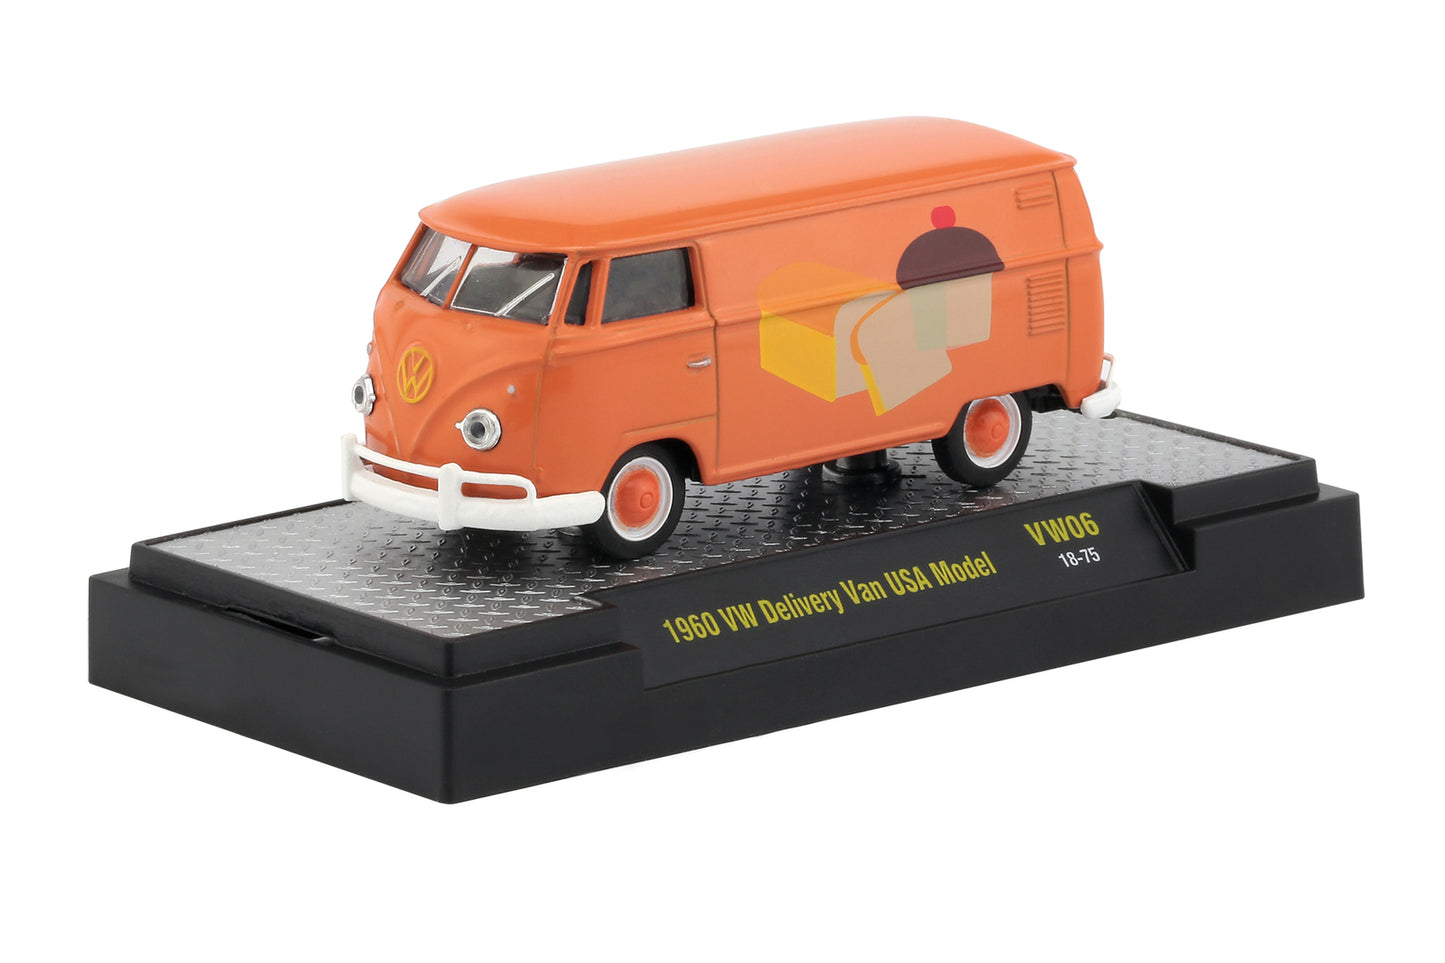 Release VW06 - 1960 VW Delivery Van USA Model (dark orange) Die Cast Model